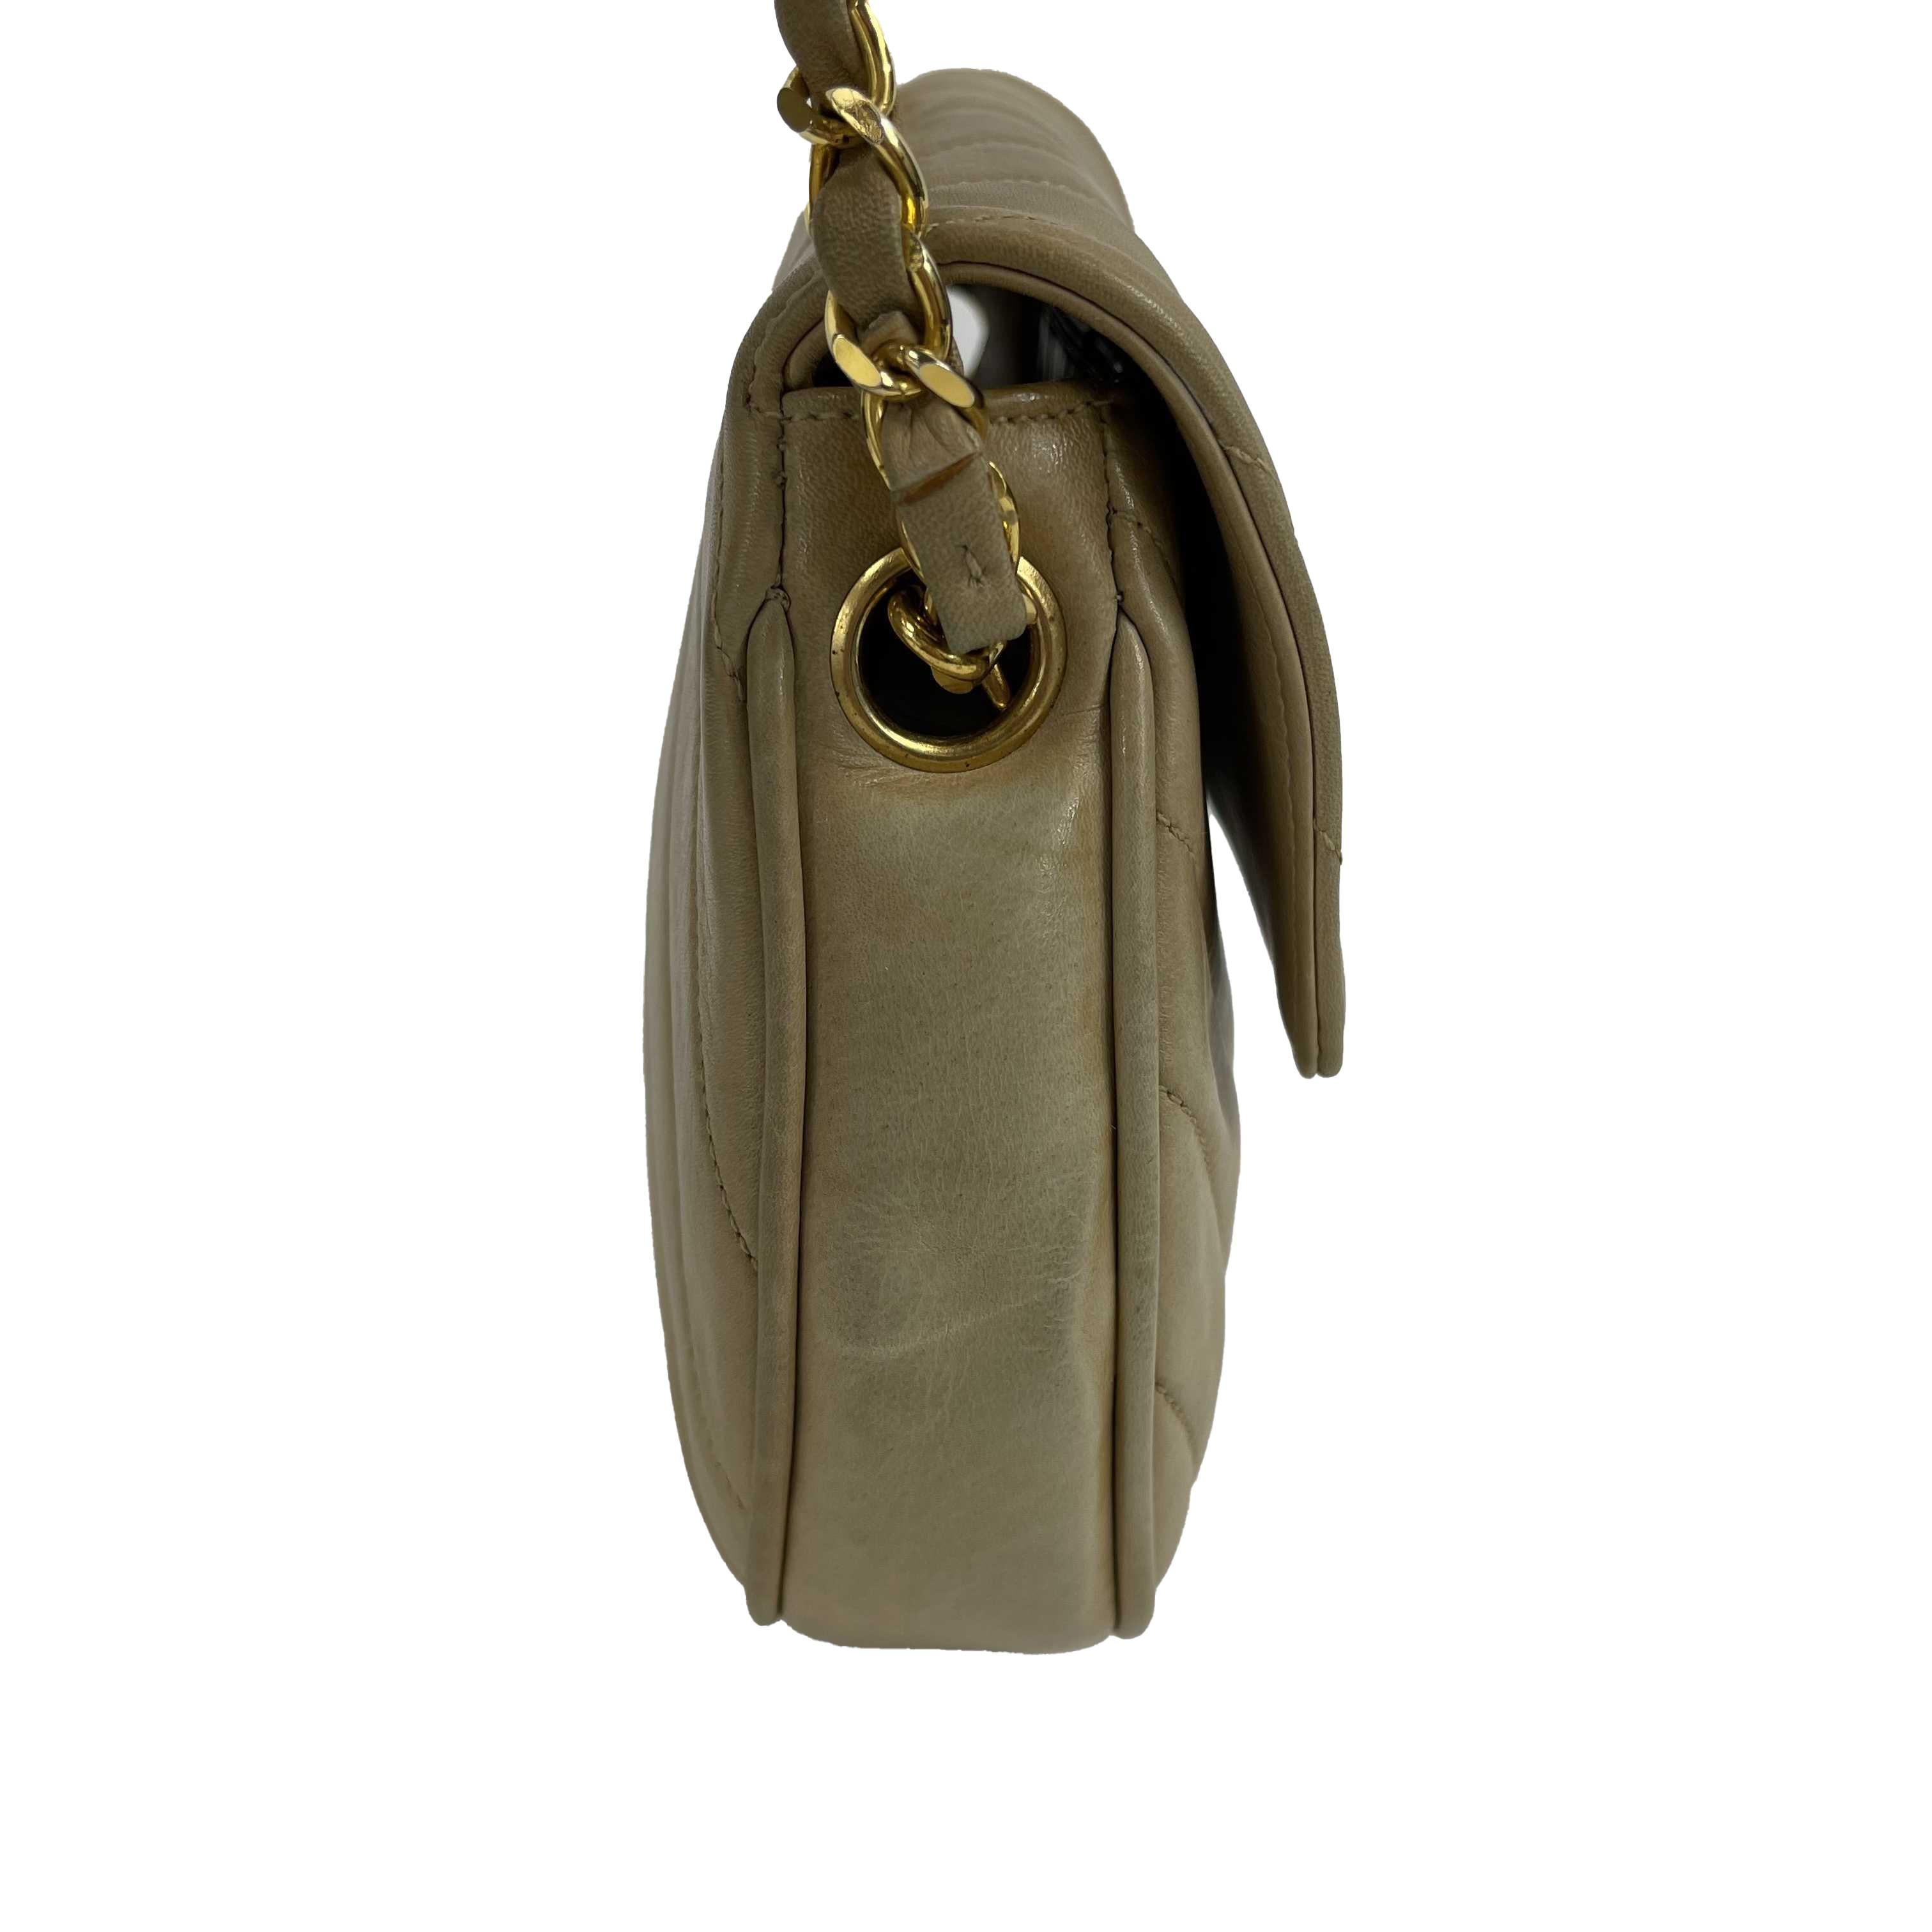 Chanel - Excellent - 90's Vintage Chevron Flap 24k - Beige, Gold - Handbag 4